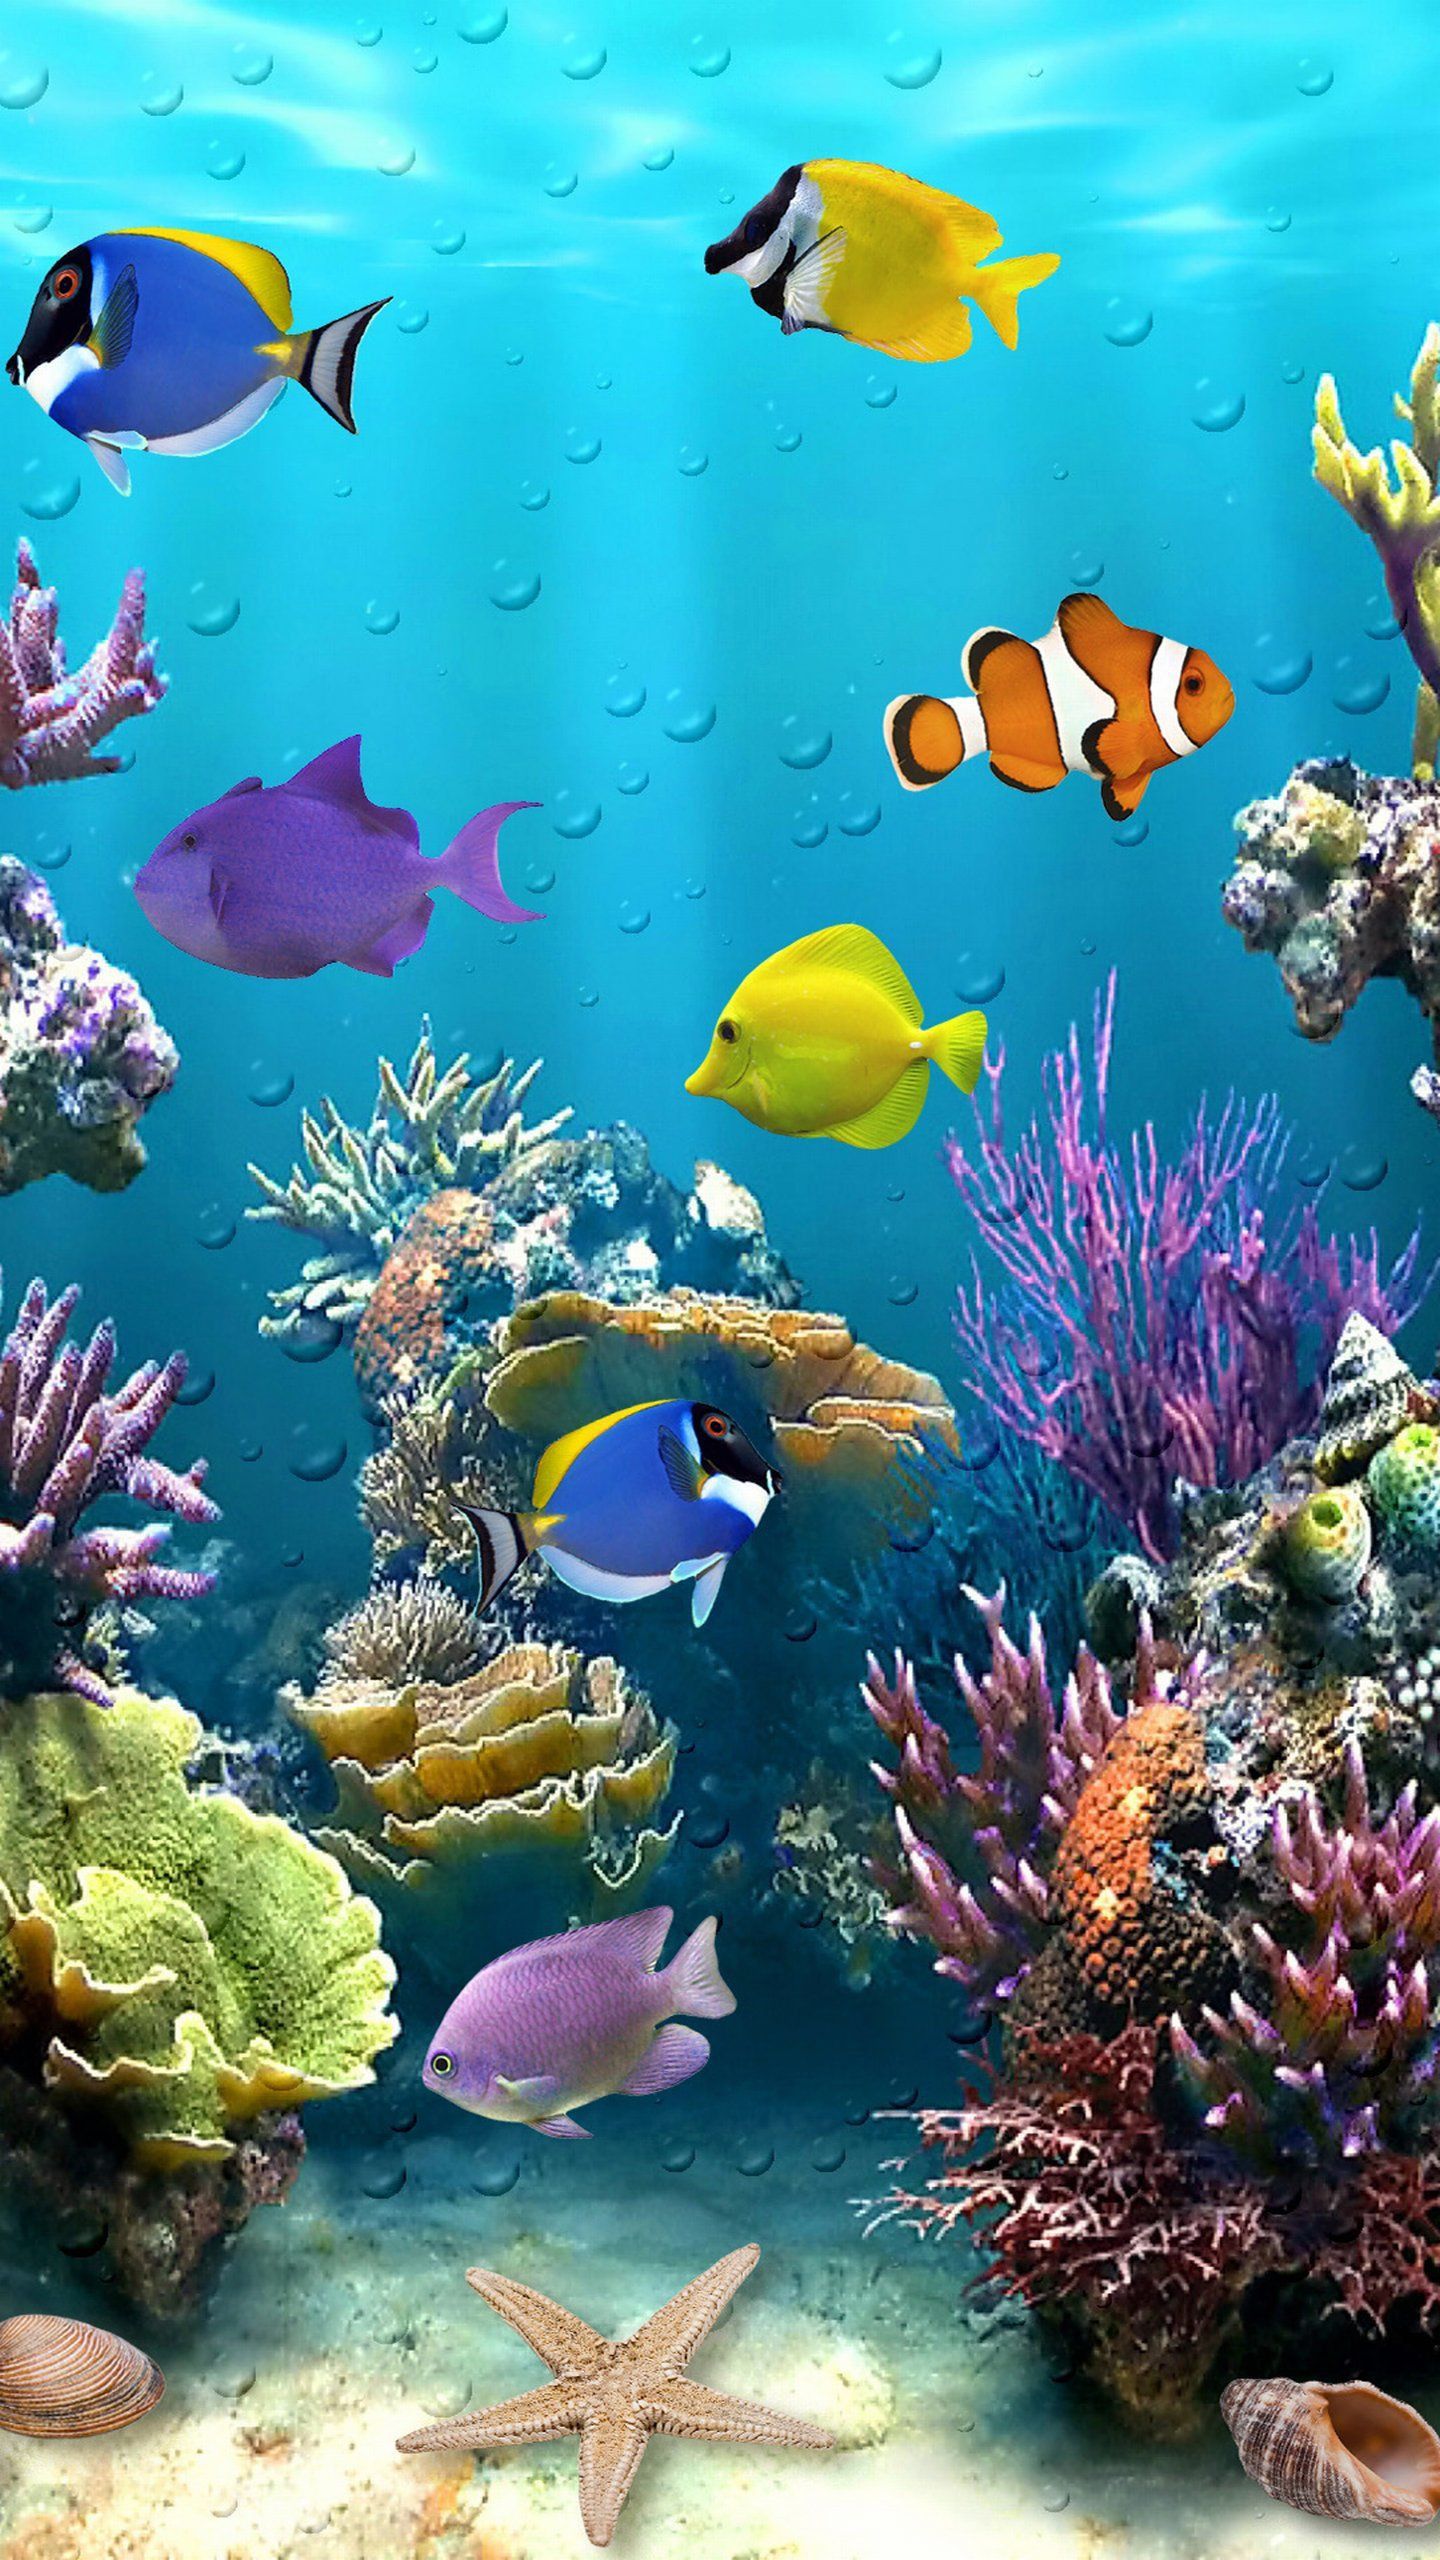 Tropical Fish Wallpaper 64 Top Free Tropical Fish Photo For Android. Fish wallpaper, Fish art, Animal wallpaper